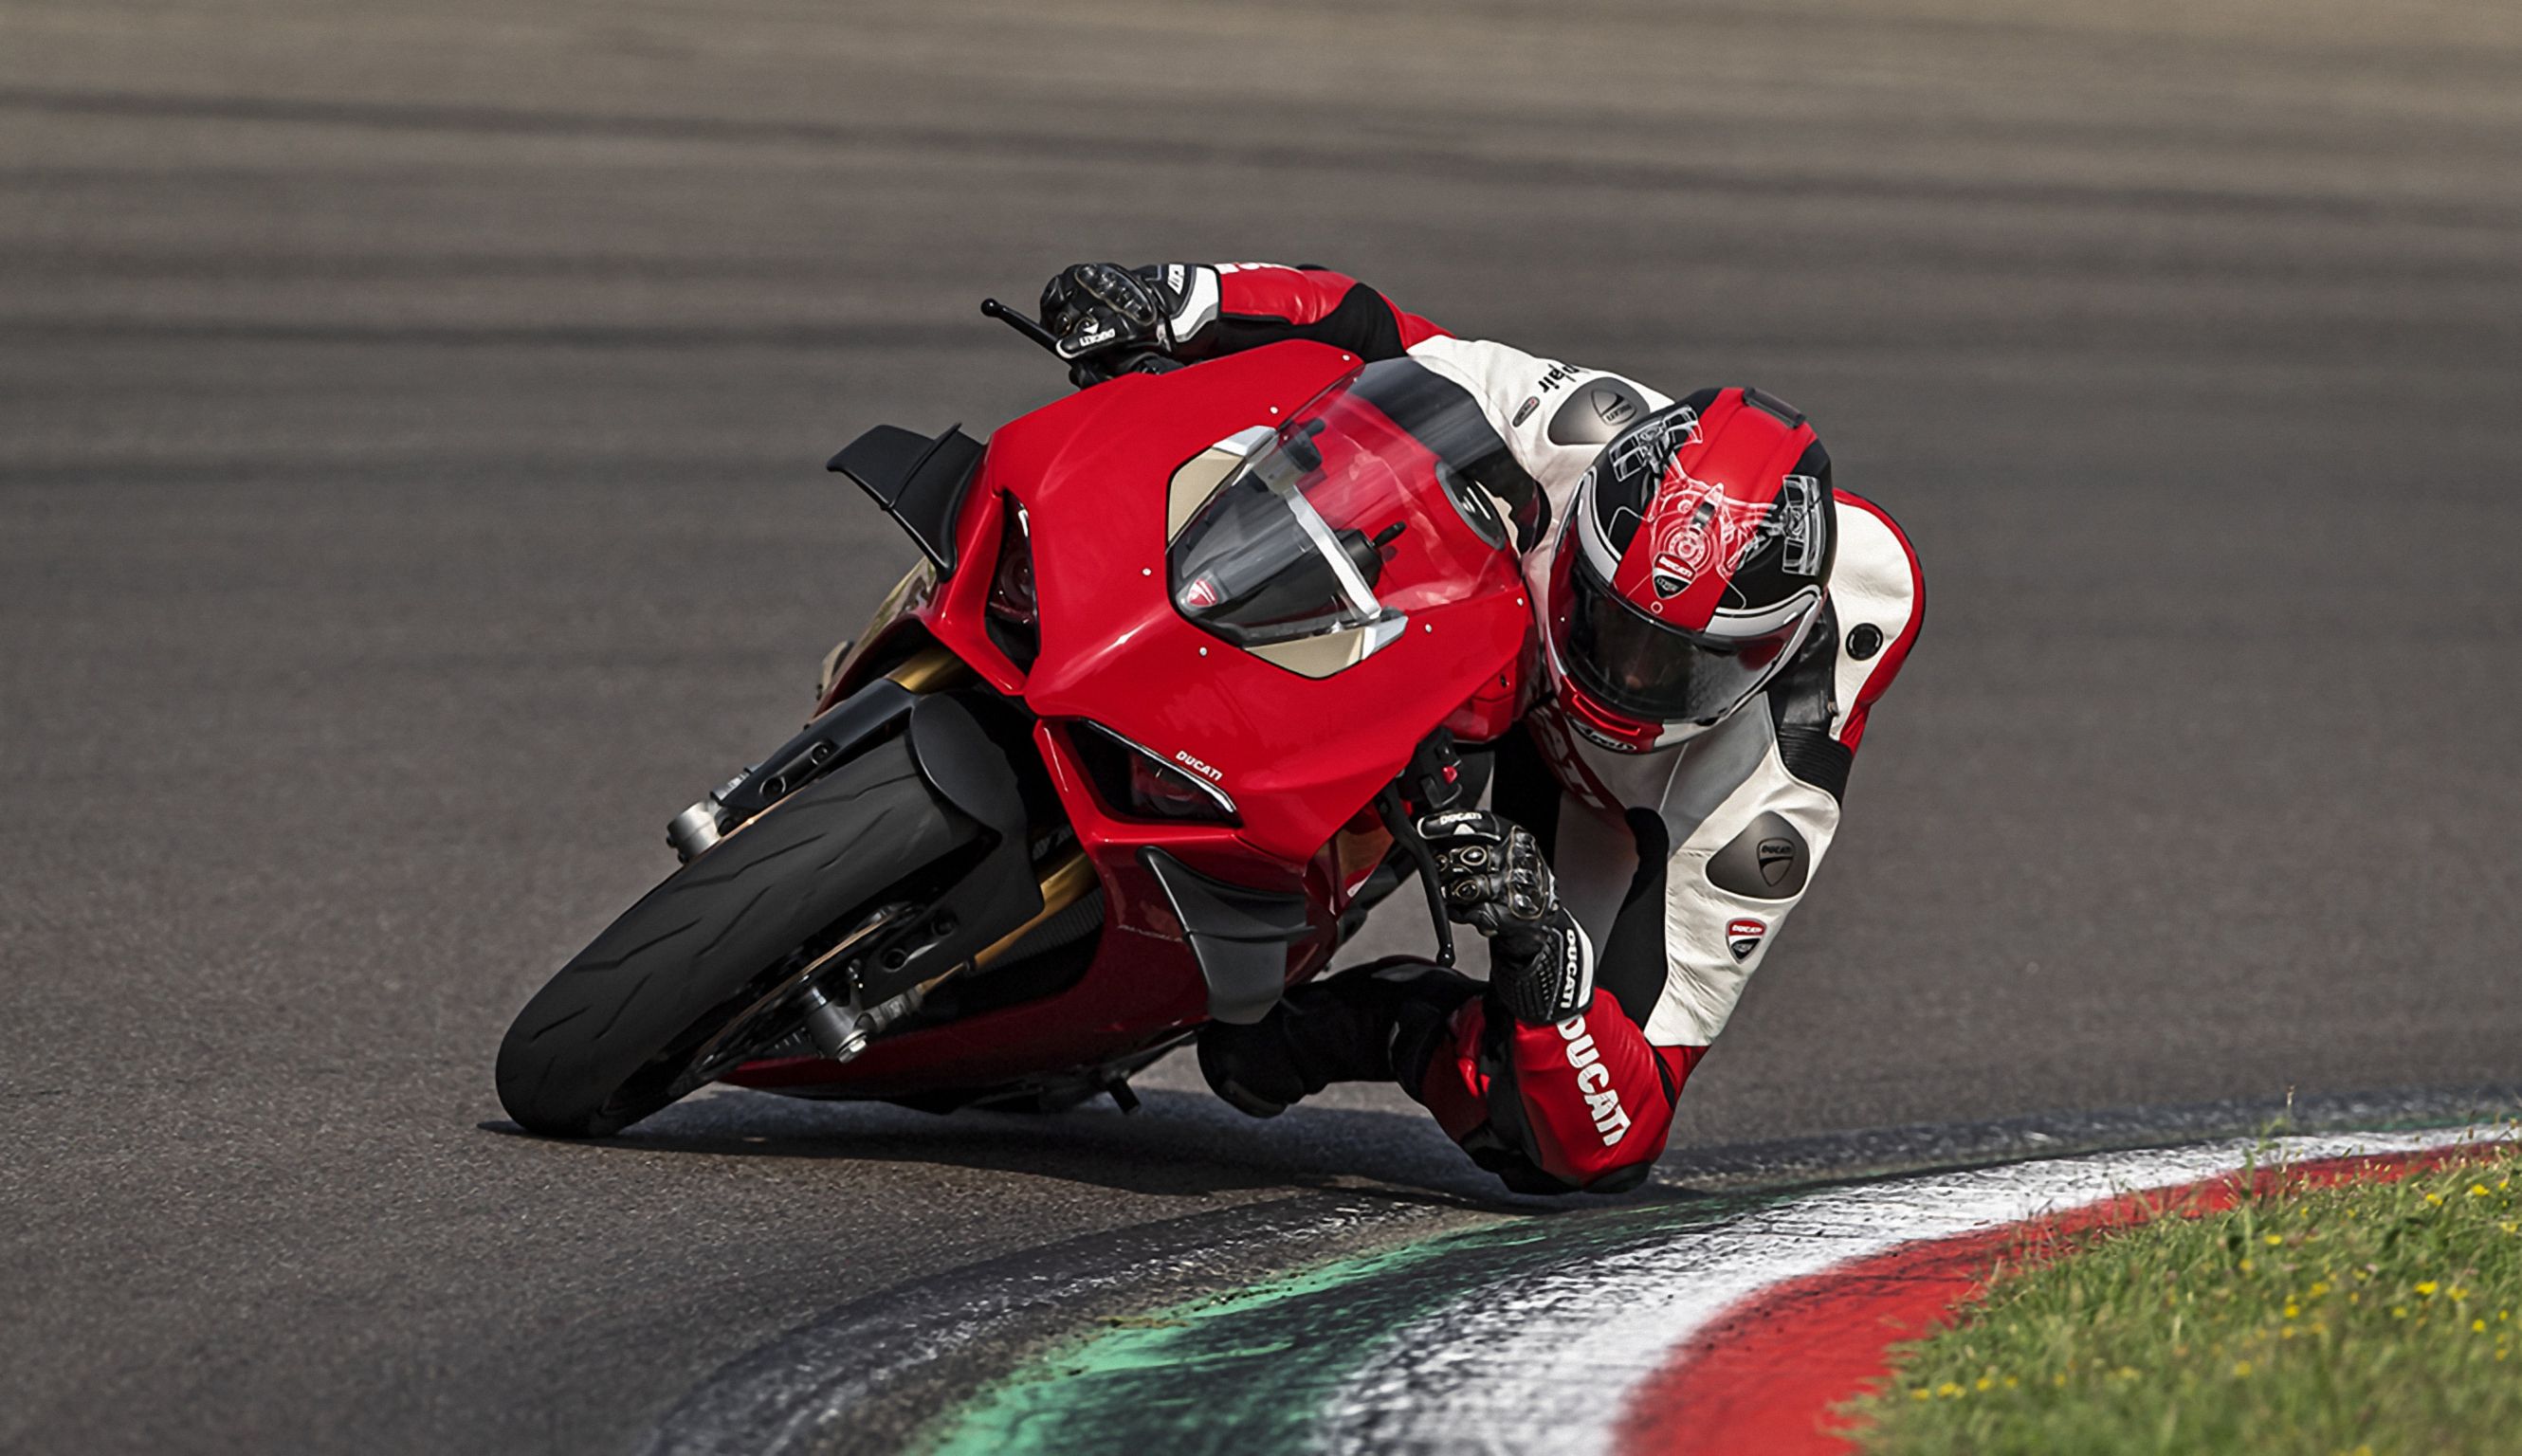 Ducati Panigale V4 riding shot